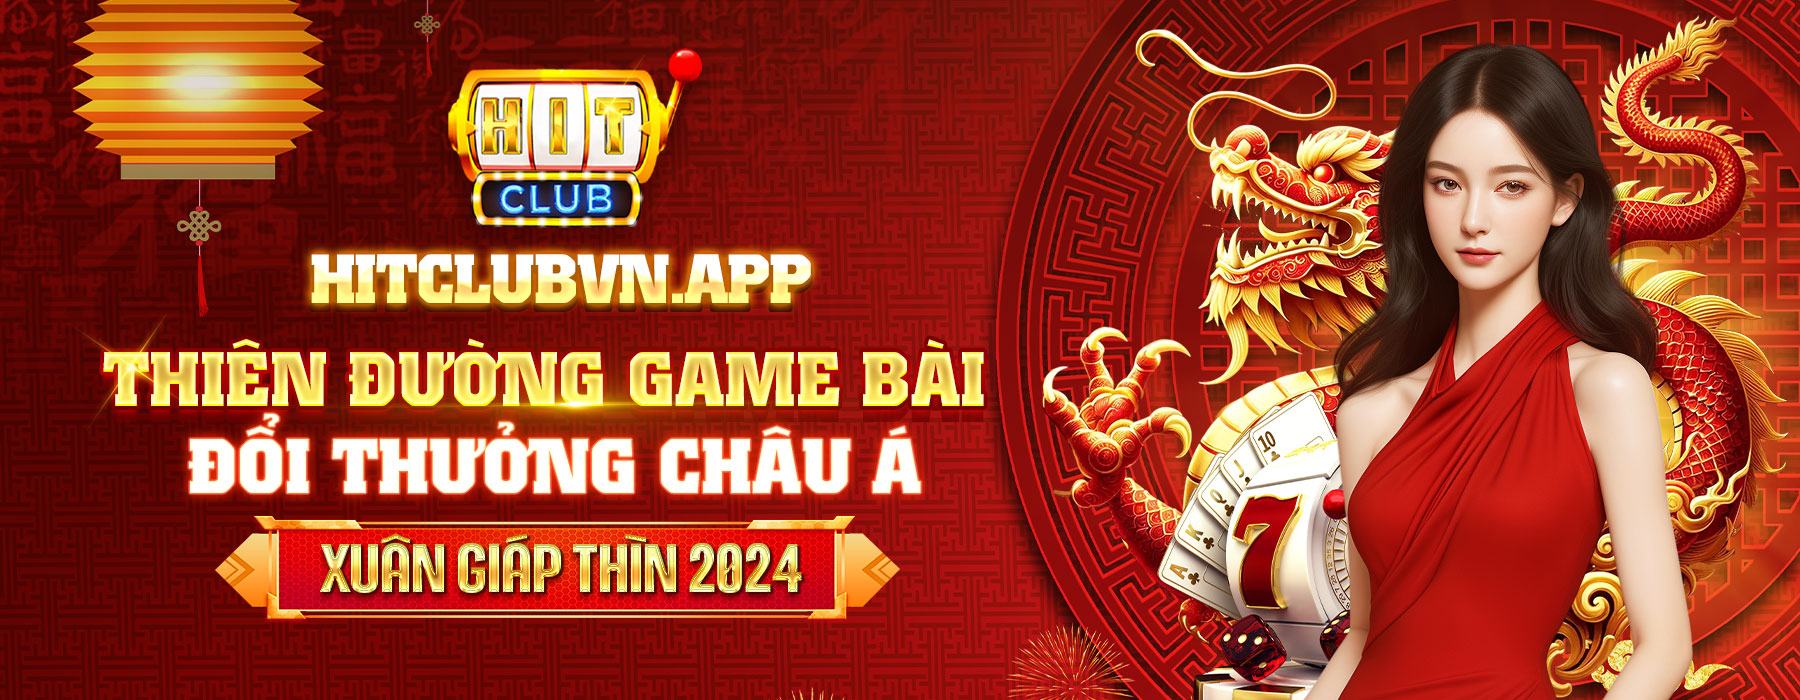 HITCLUBVNAPP Thien duong Game Bai Tet 2024 1800x700